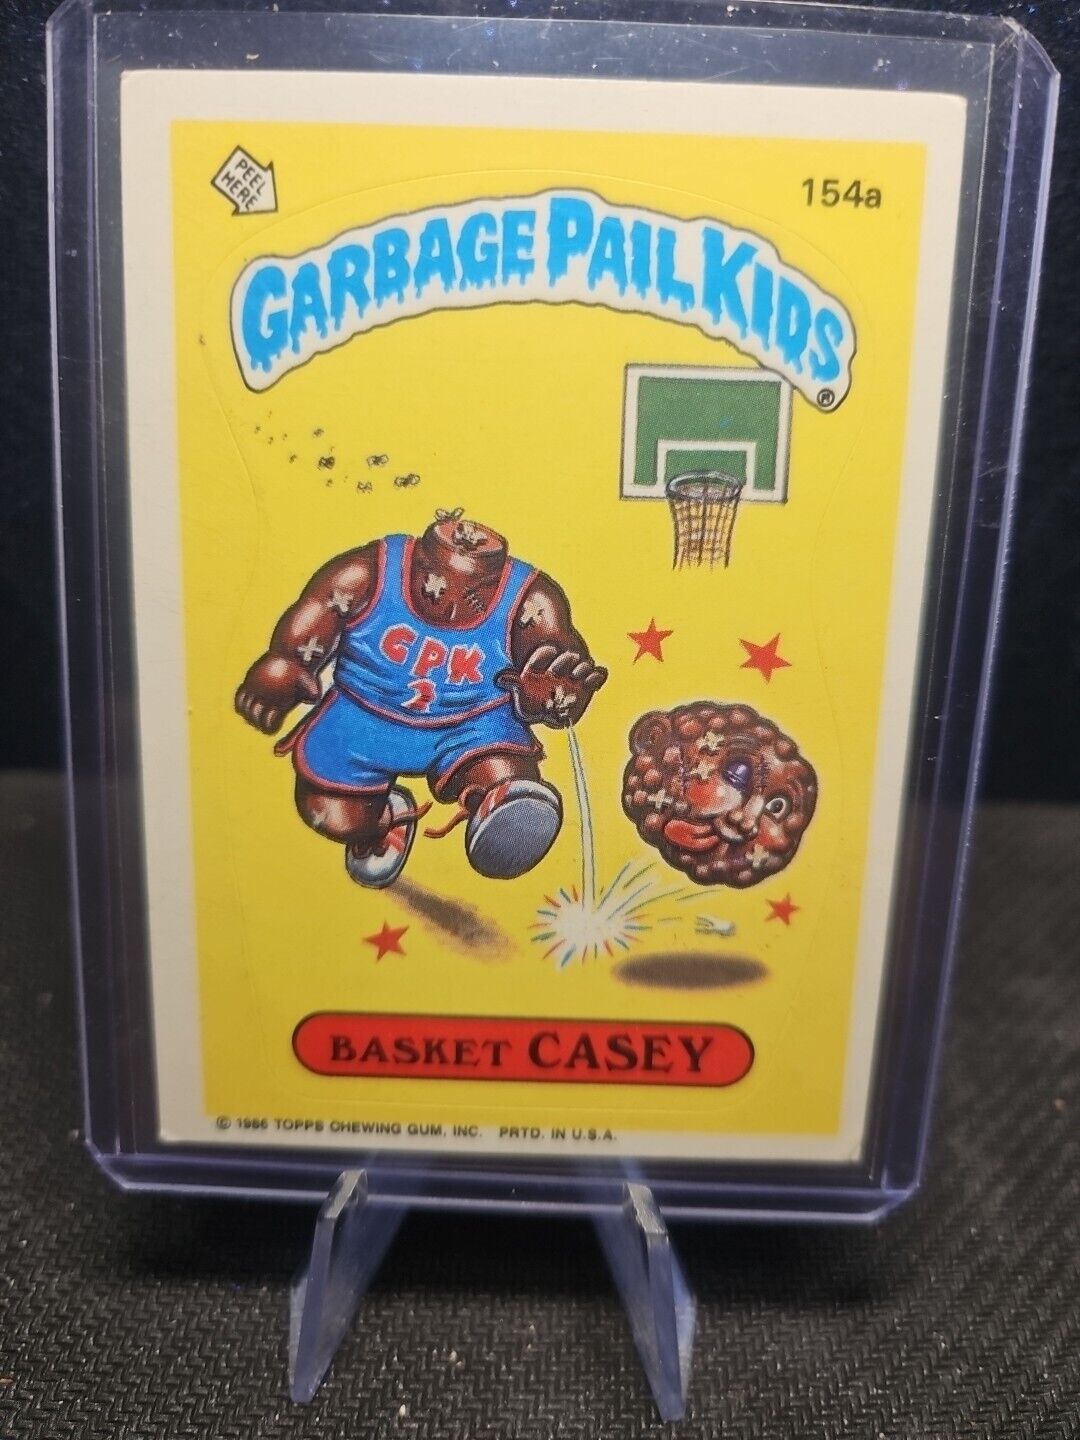 1986 TOPPS GARBAGE PAIL KIDS BASKET CASEY STICKER CARD 154a Corner Wear See Pics